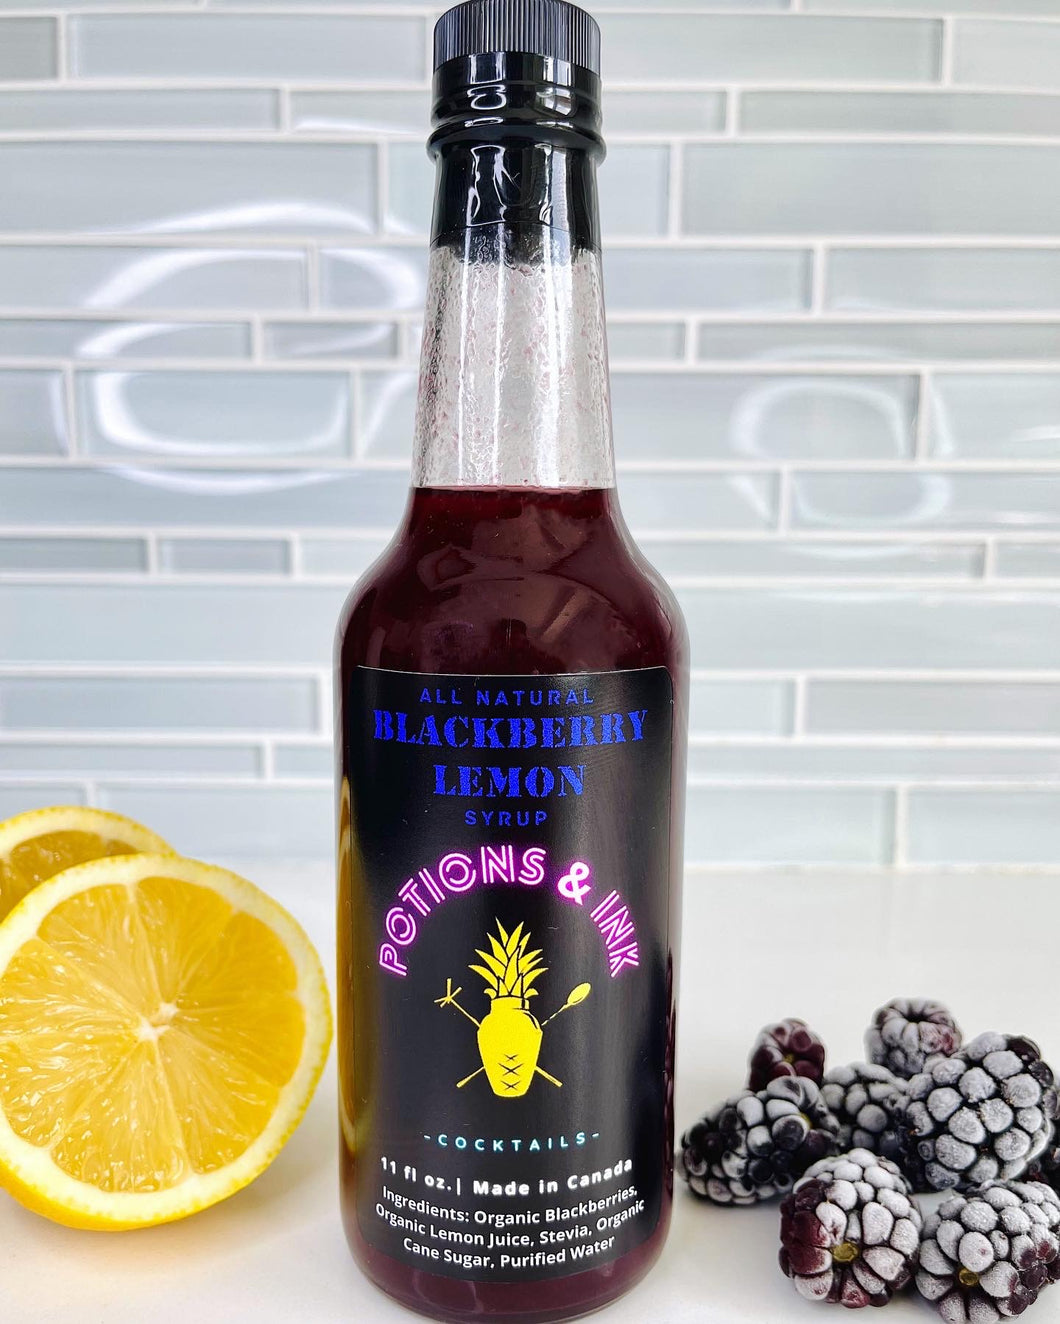 All Natural Blackberry Lemon Syrup